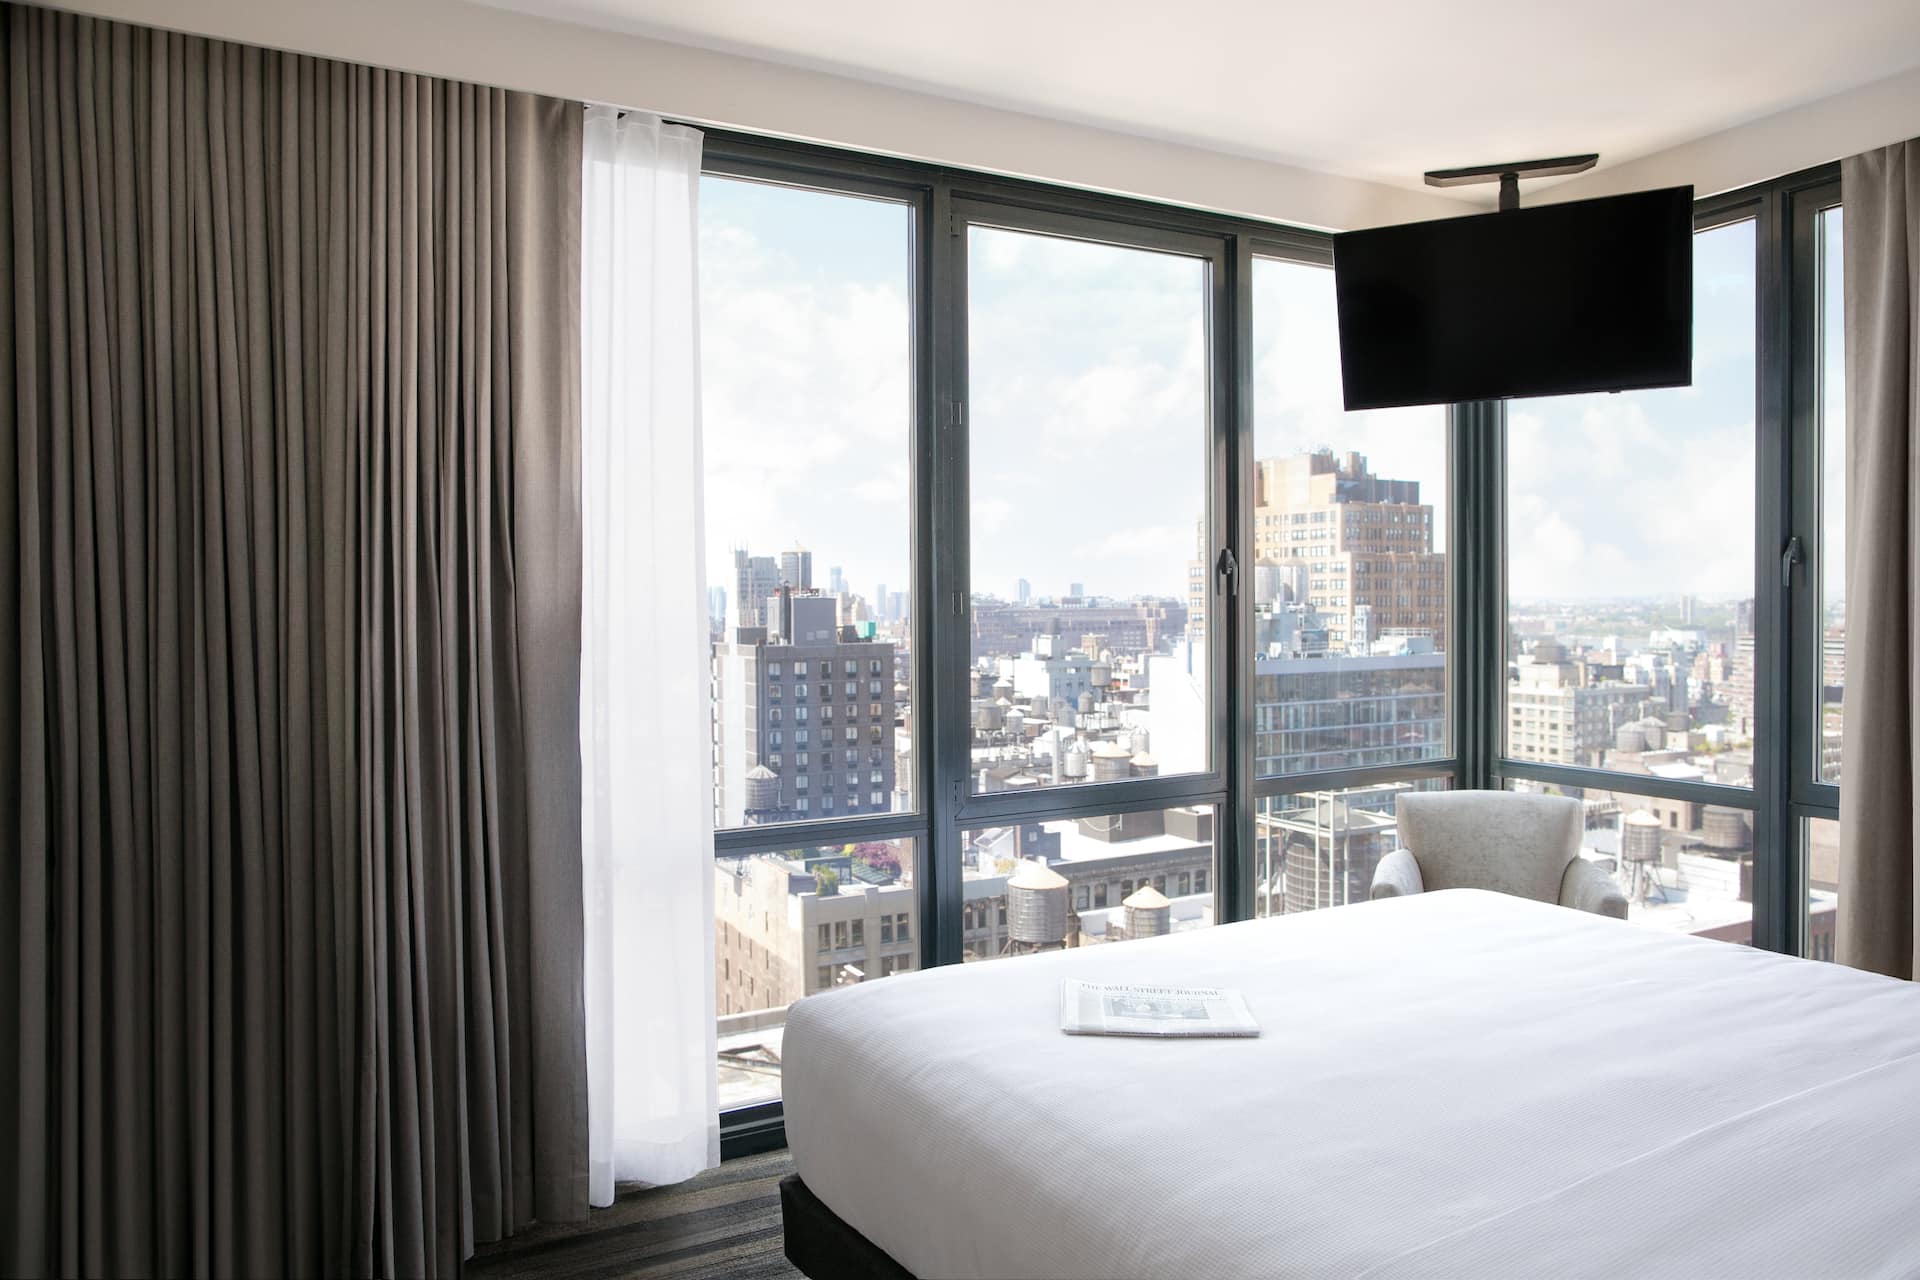 Hyatt House New York/Chelsea hotel room overlooking NYC